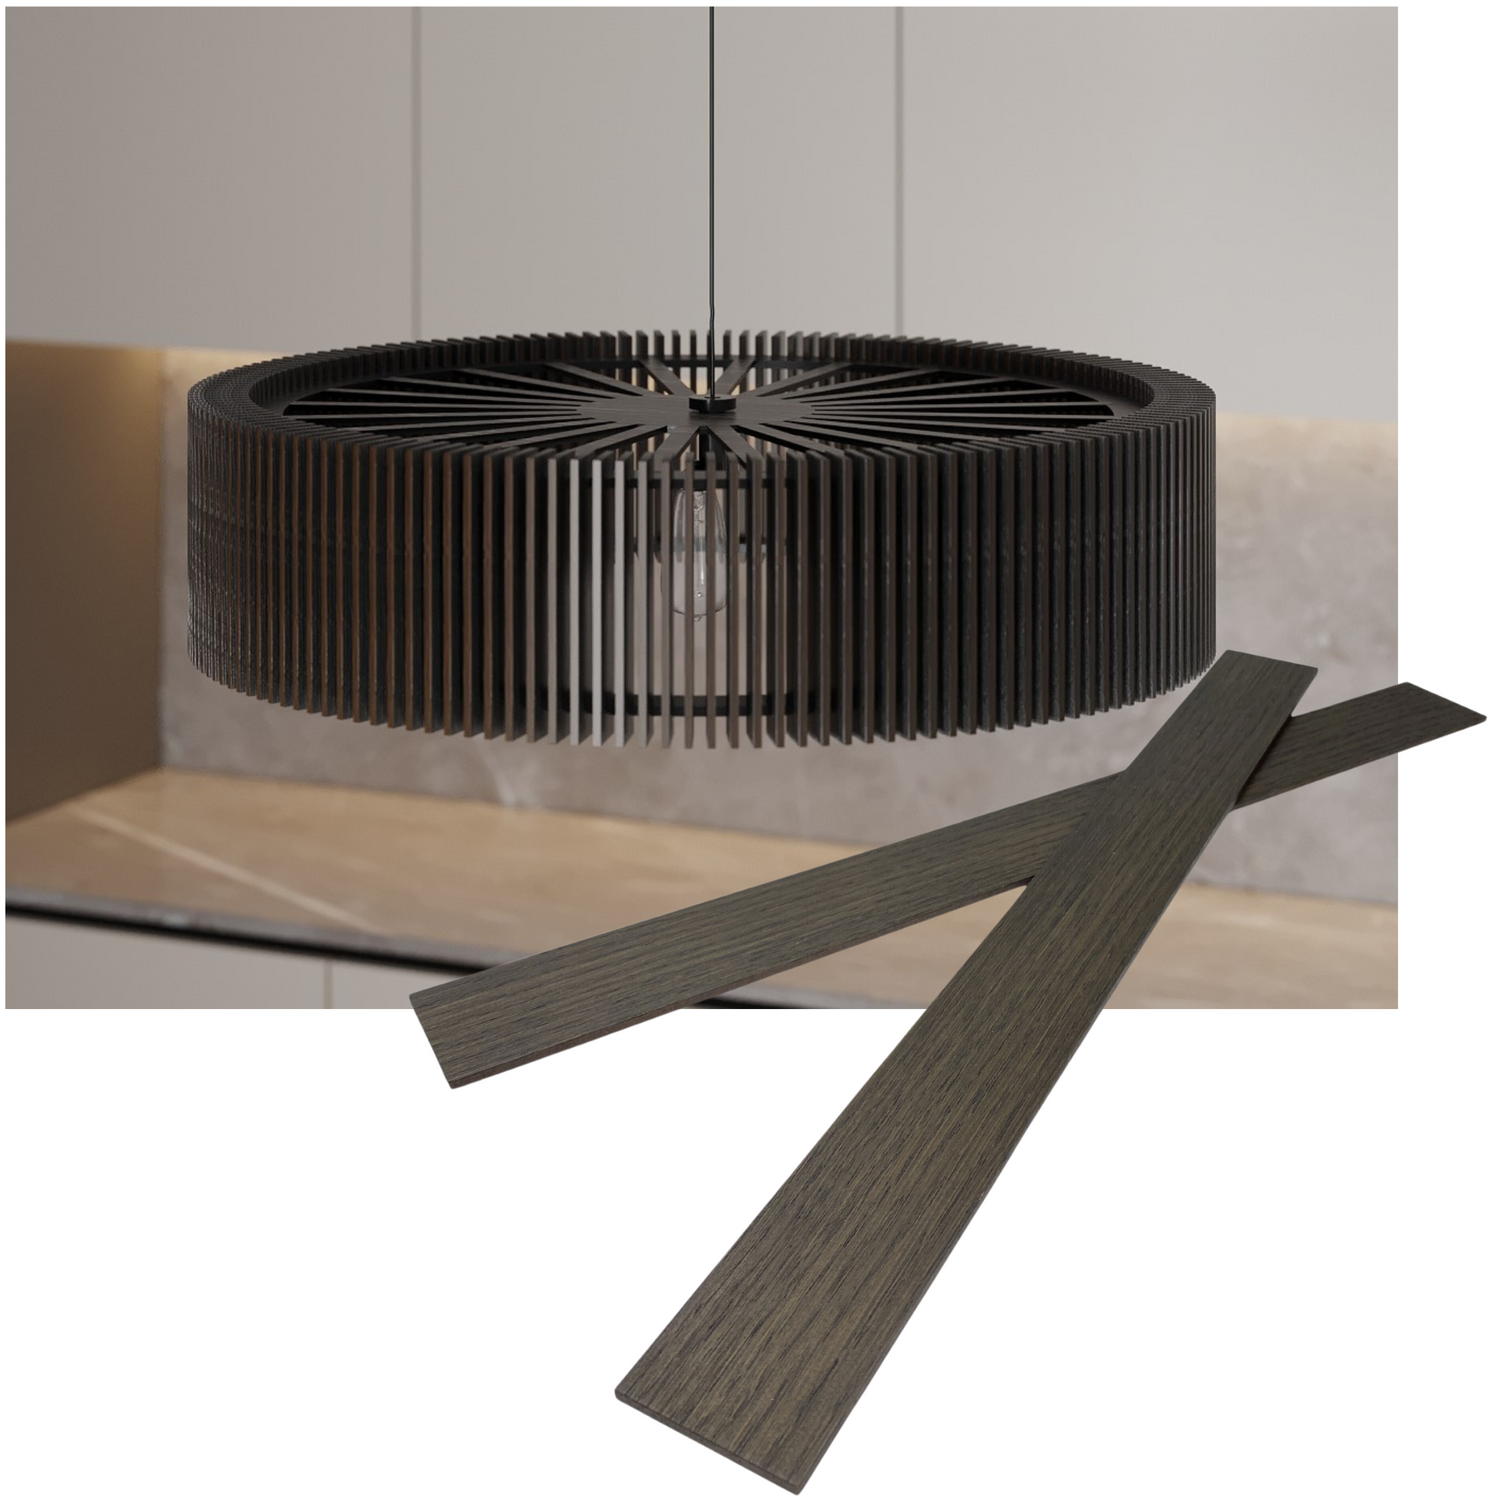 Artvoom Wooden round pendant lamp made of slats